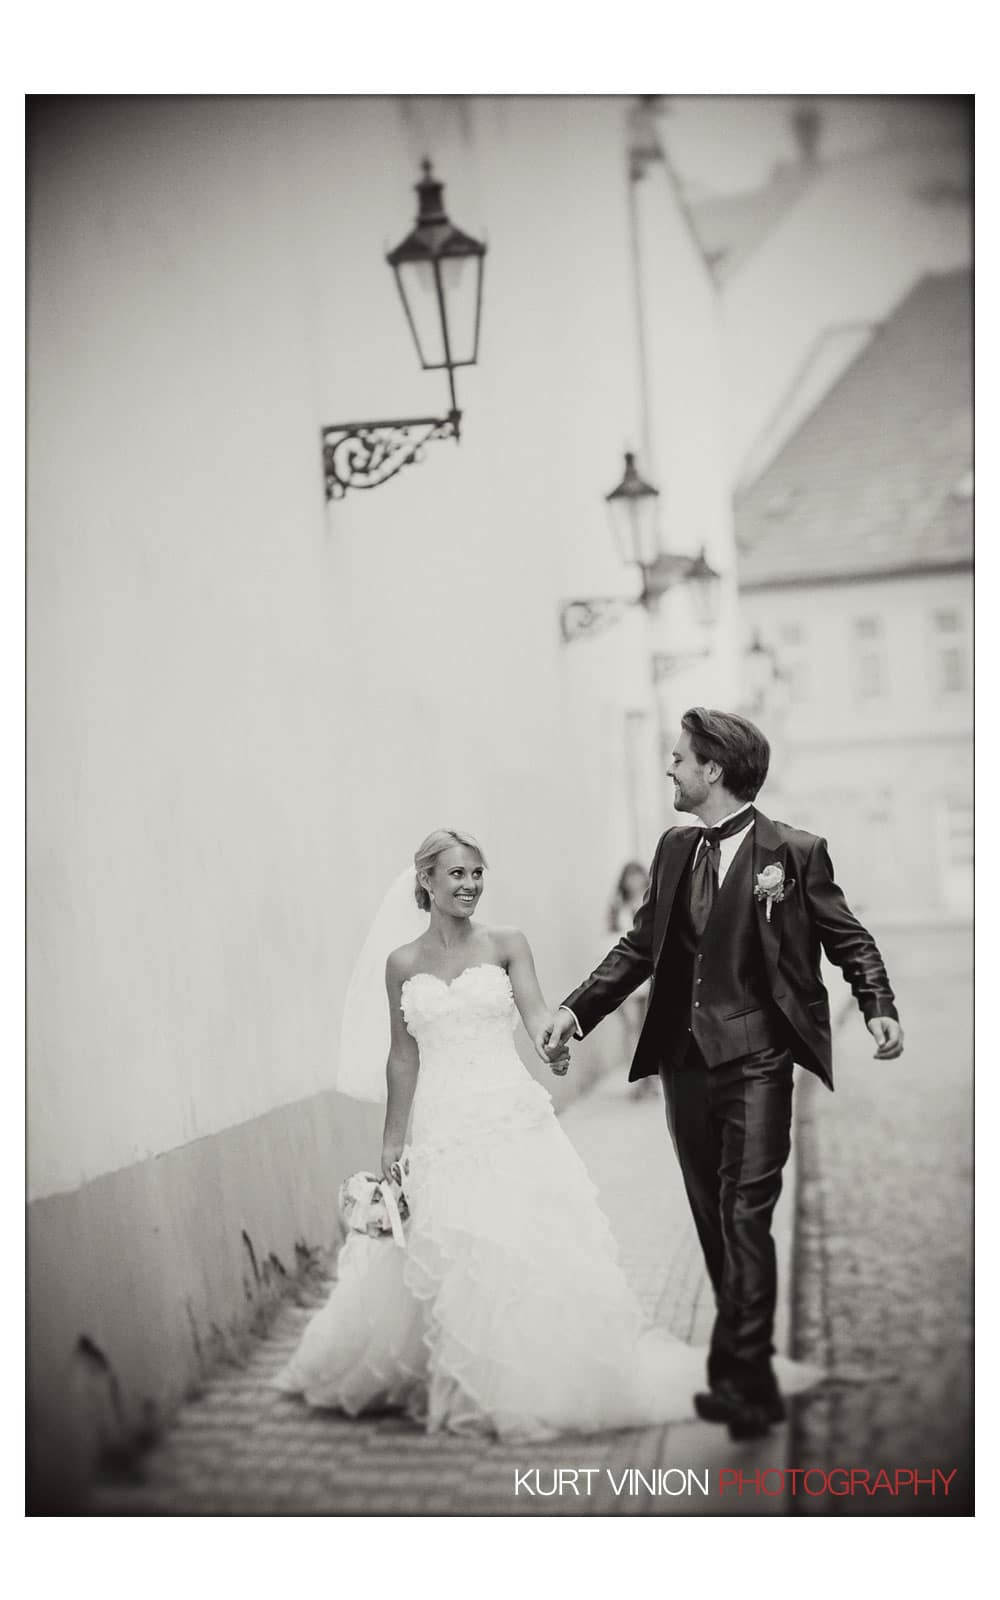 Prague Clementinum wedding / Jess + James - portraits near the Charles Bridge 